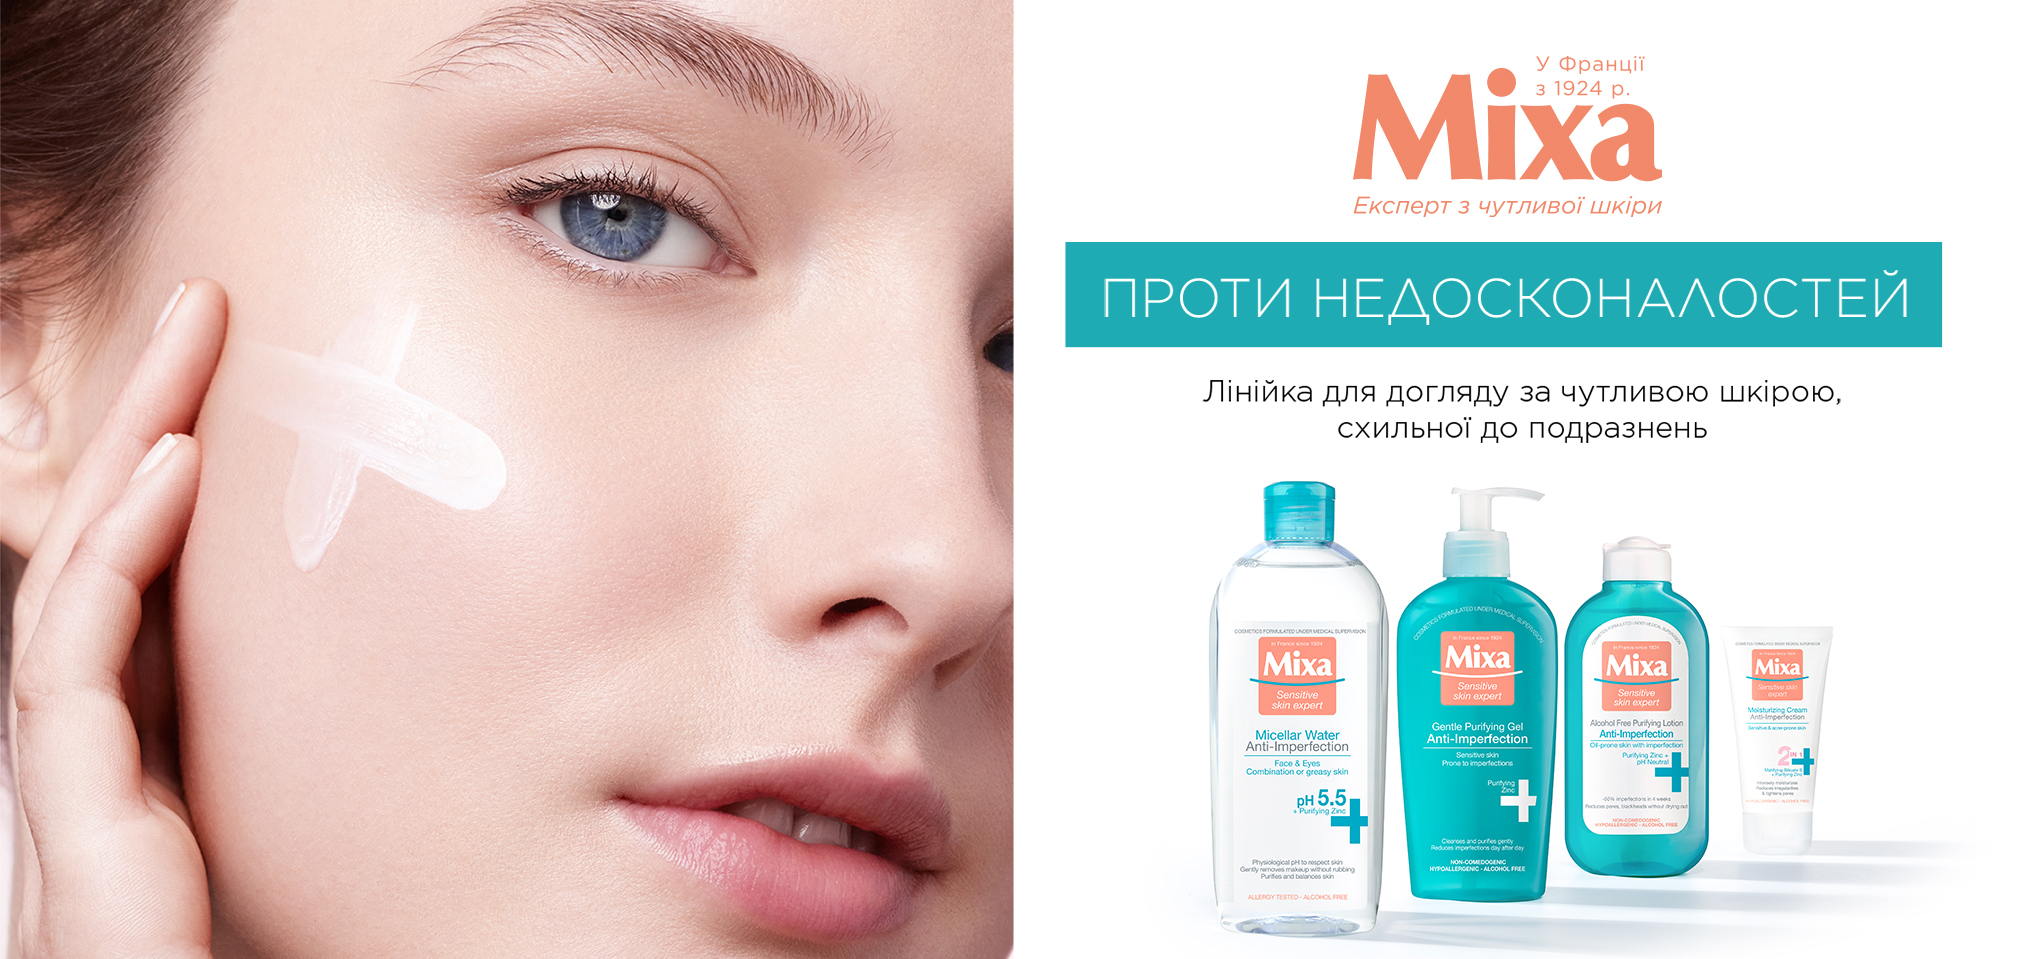 Mixa Sensitive Skin Expert Cleansing Gel